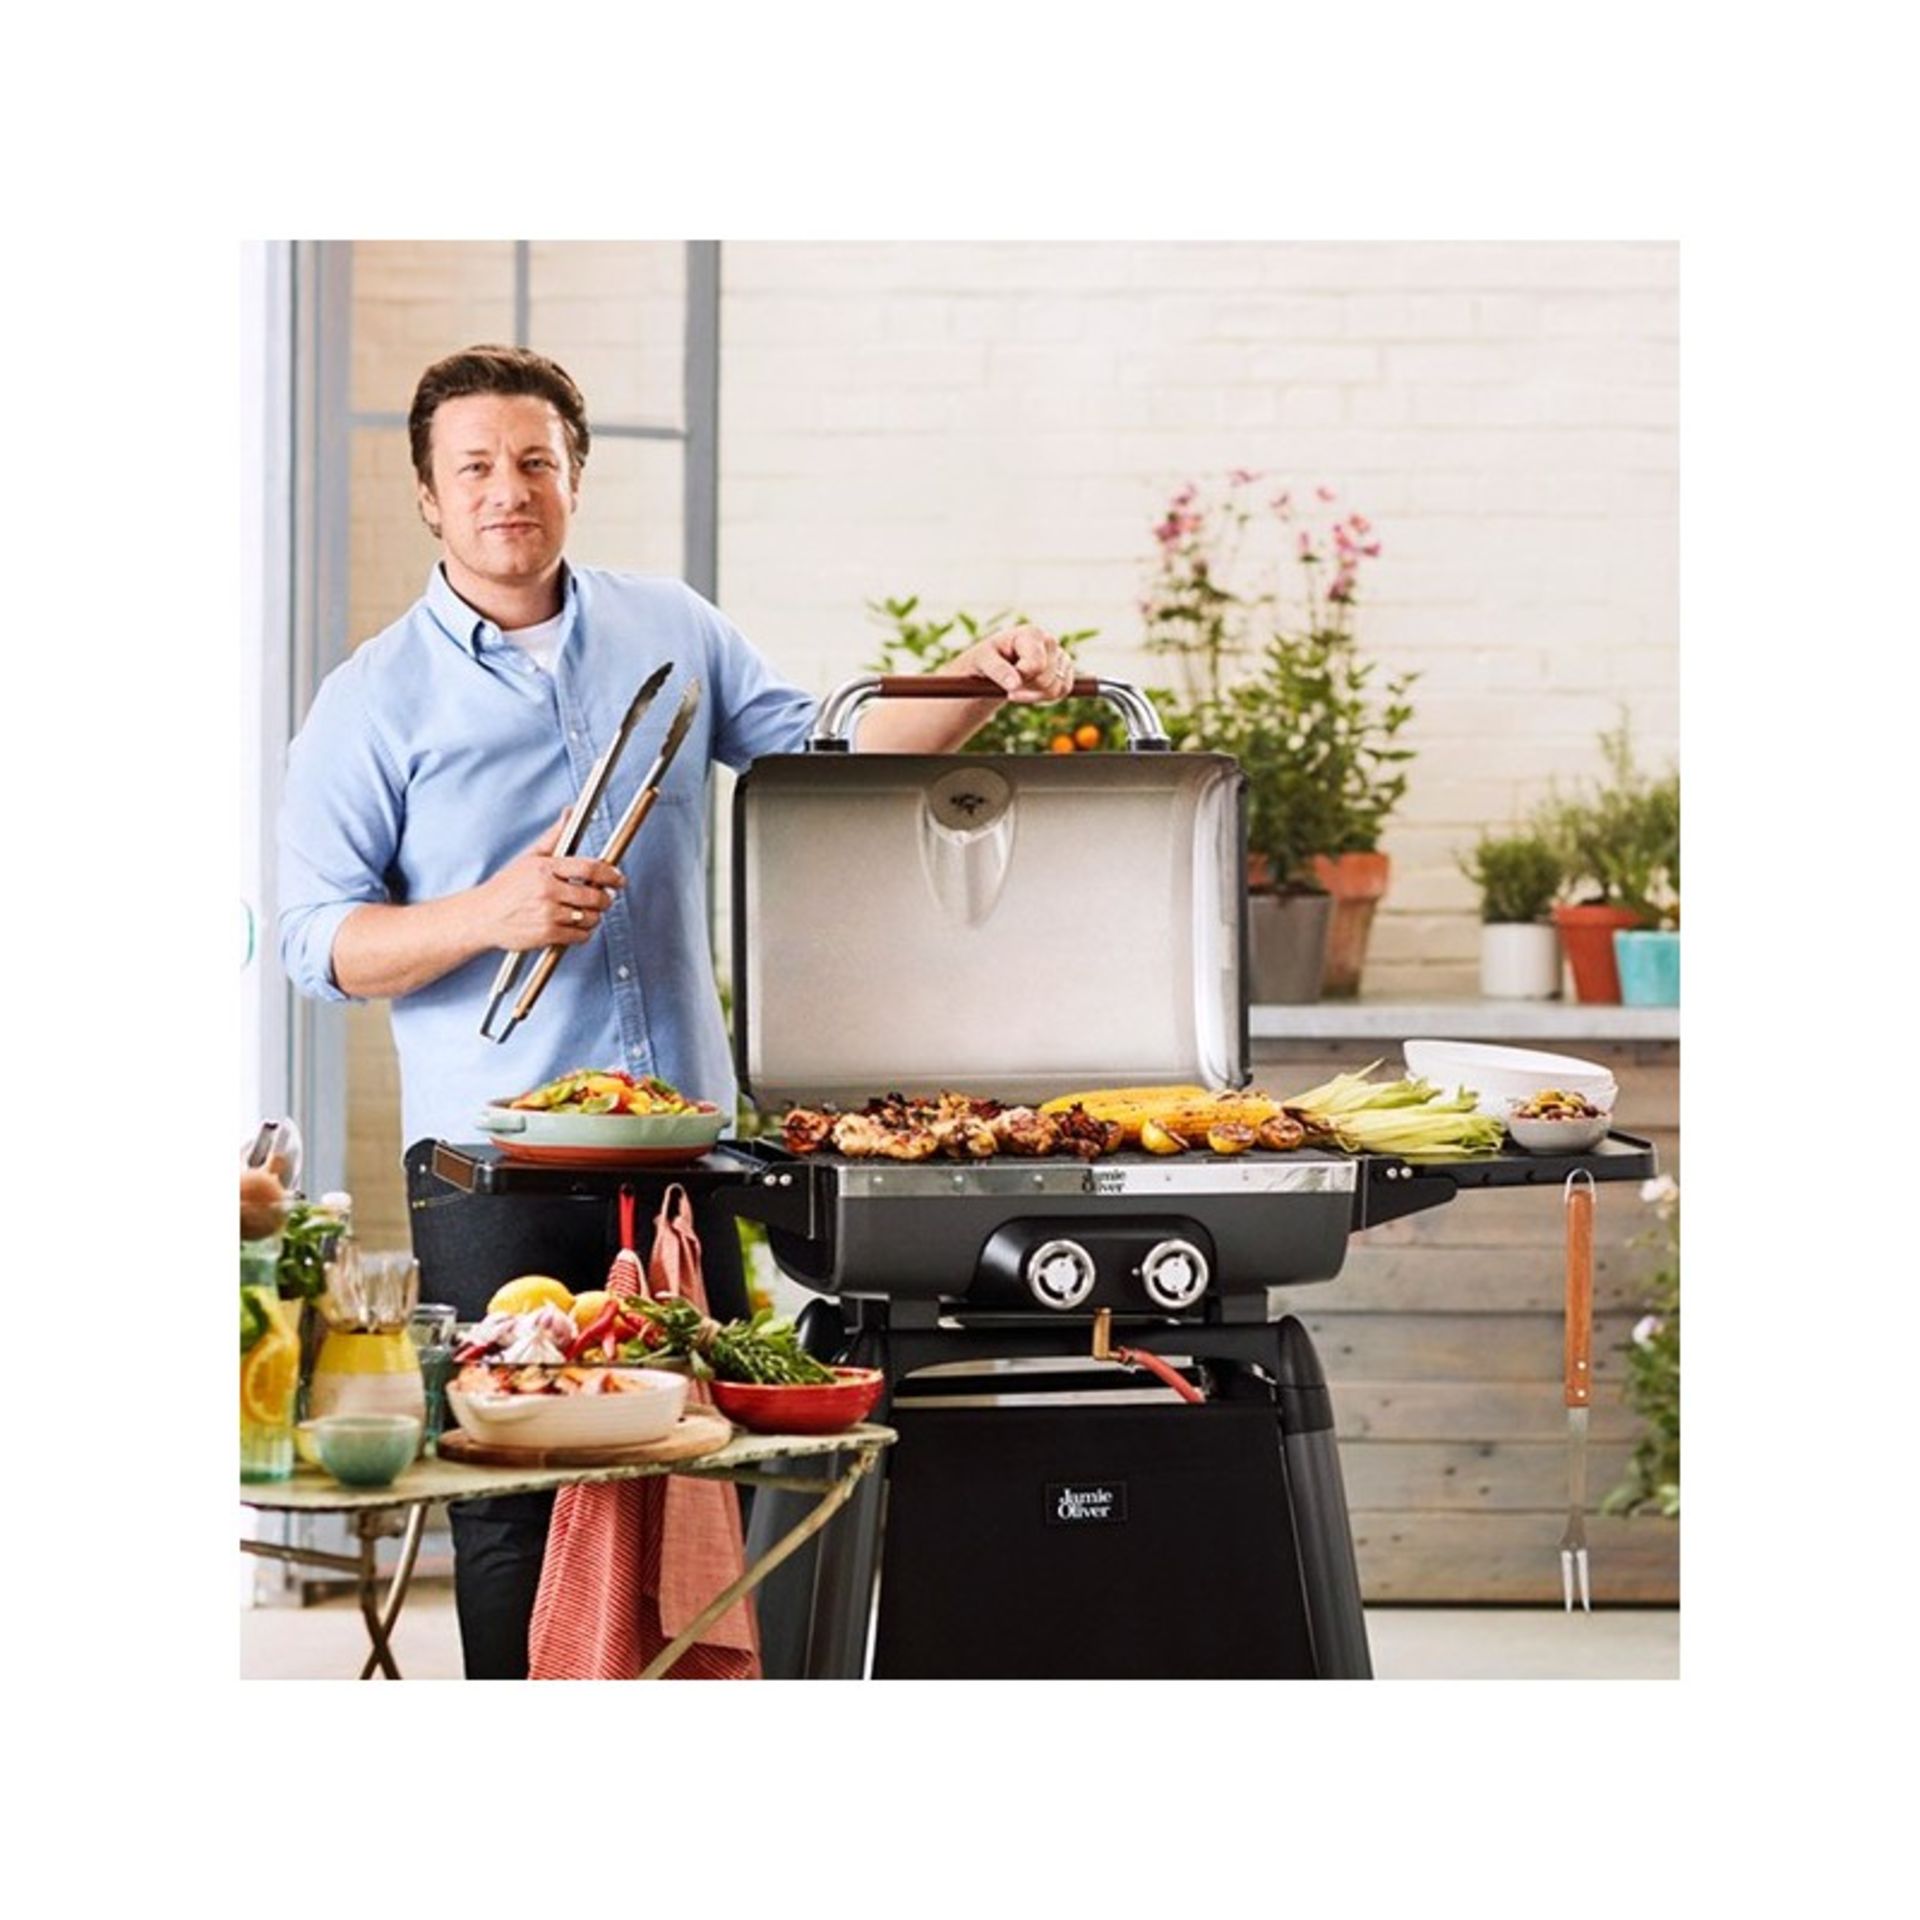 V Brand New Jamie Oliver Explorer 5500 BBQ - Grey - Online Price 399.00 Euros (JamieOliverBBQ.com) - Image 3 of 3